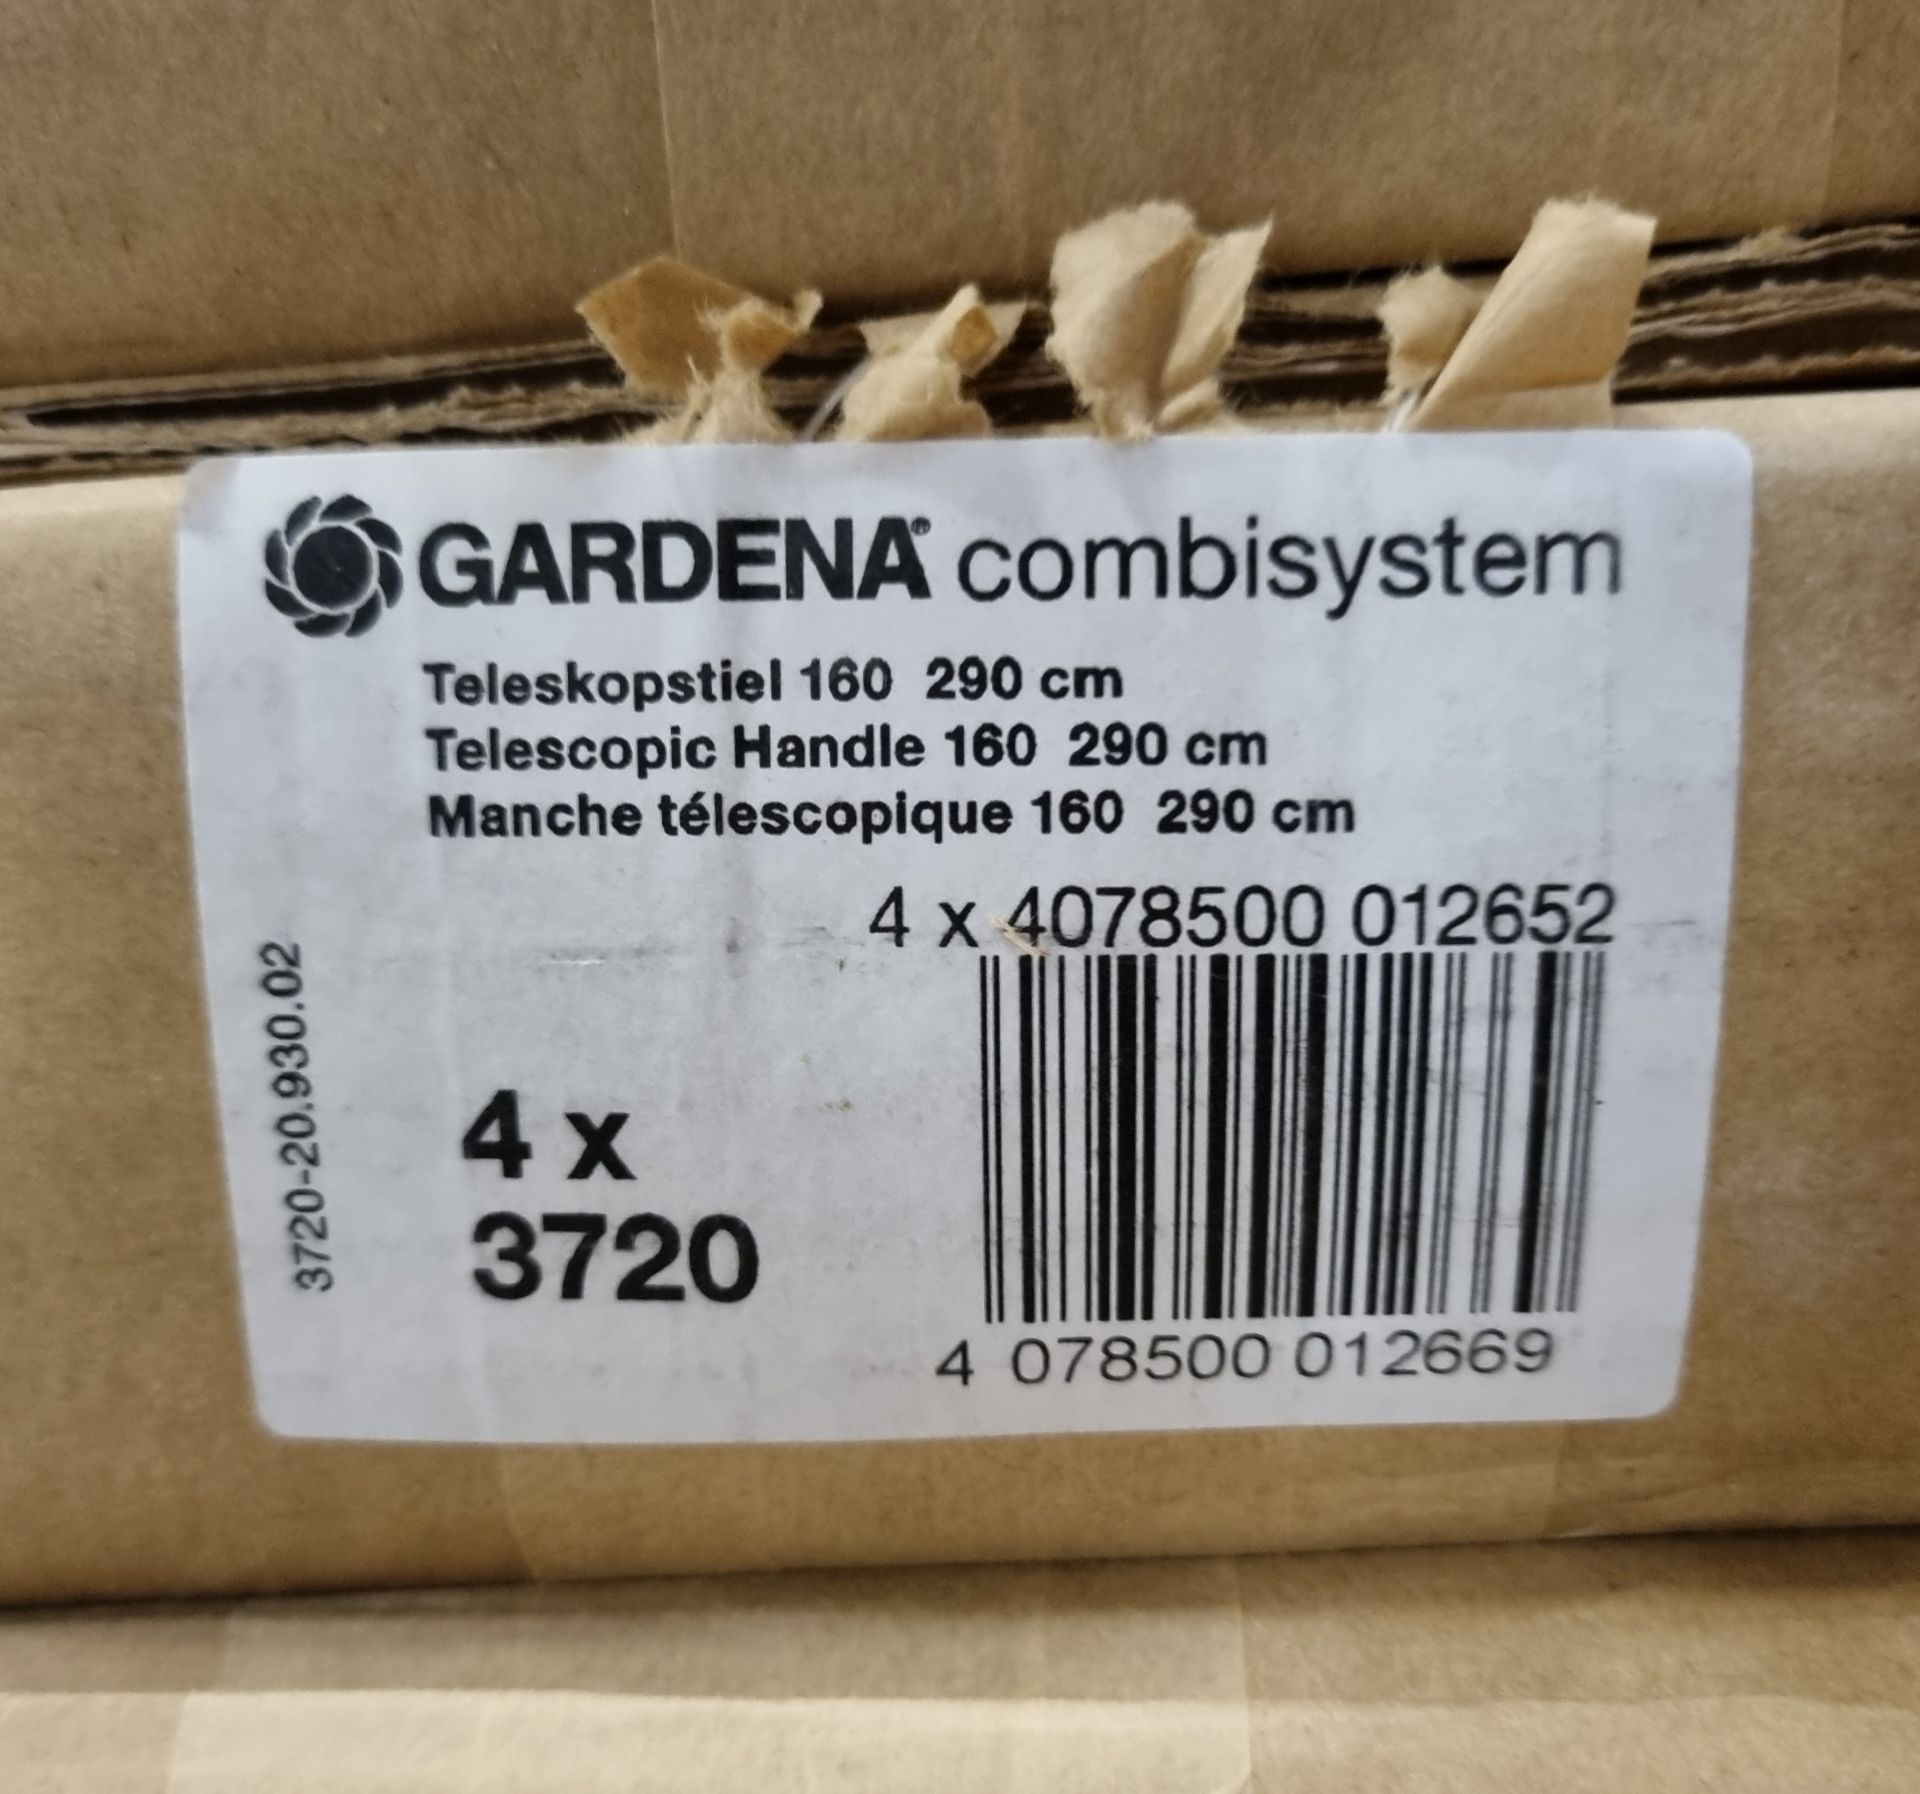 40x Gardena combisystem 210 - 390cm telescopic handles, 72x Gardena combisystem 160 - 290cm handles - Image 6 of 6